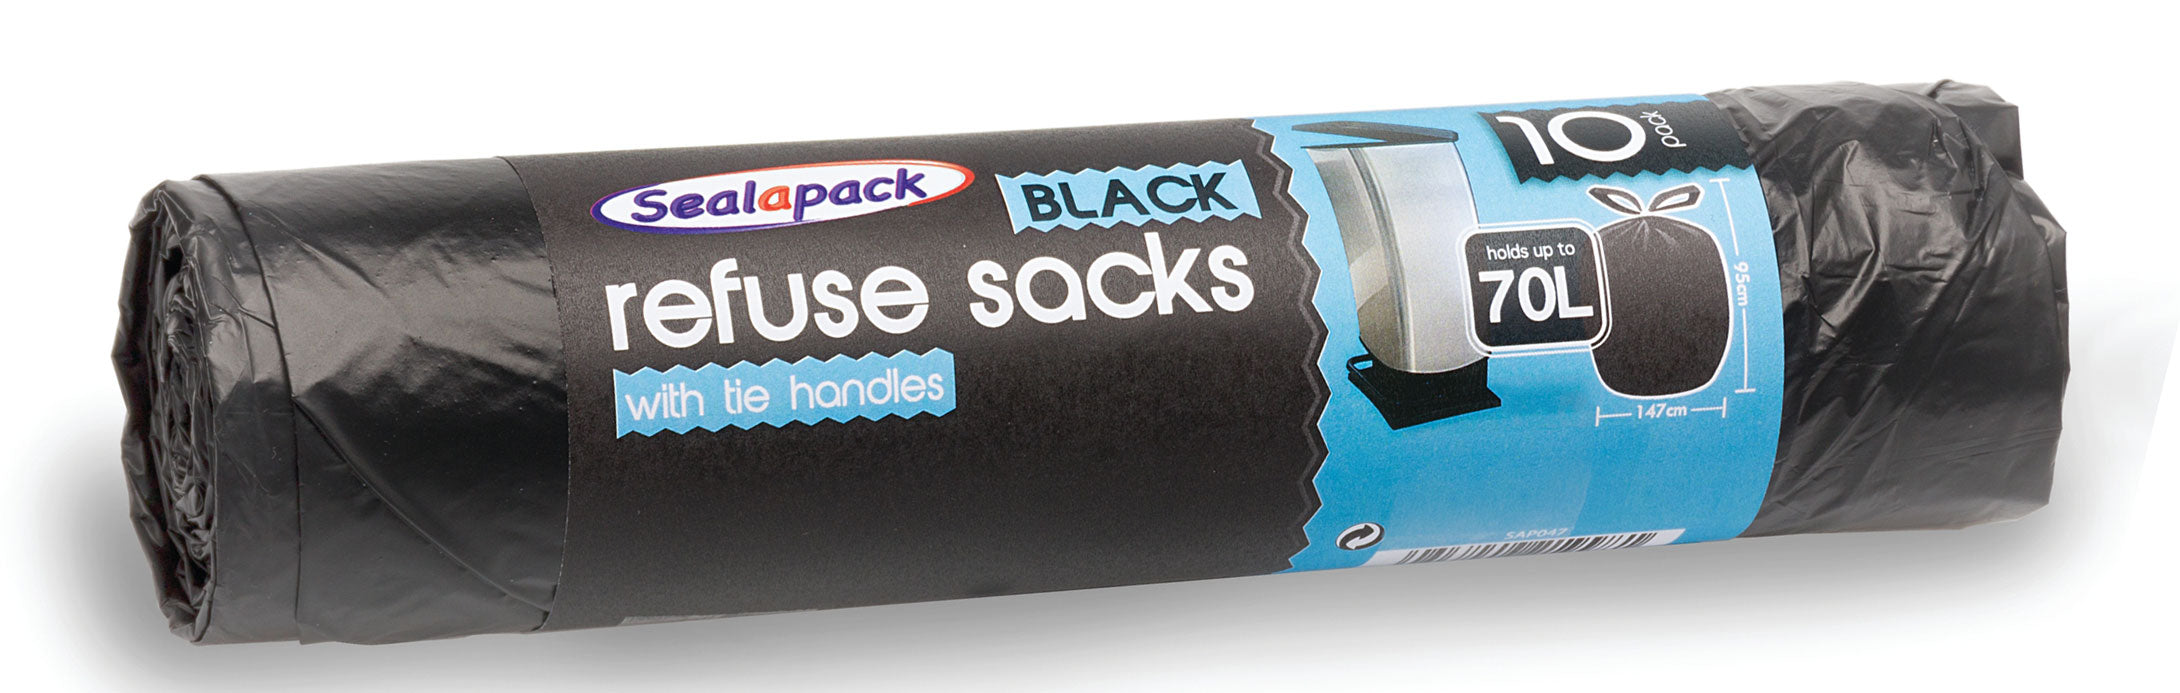 20-x-Sealapack-Refuse-Sack-Tie-Handle-70-Litre-10-Pack-